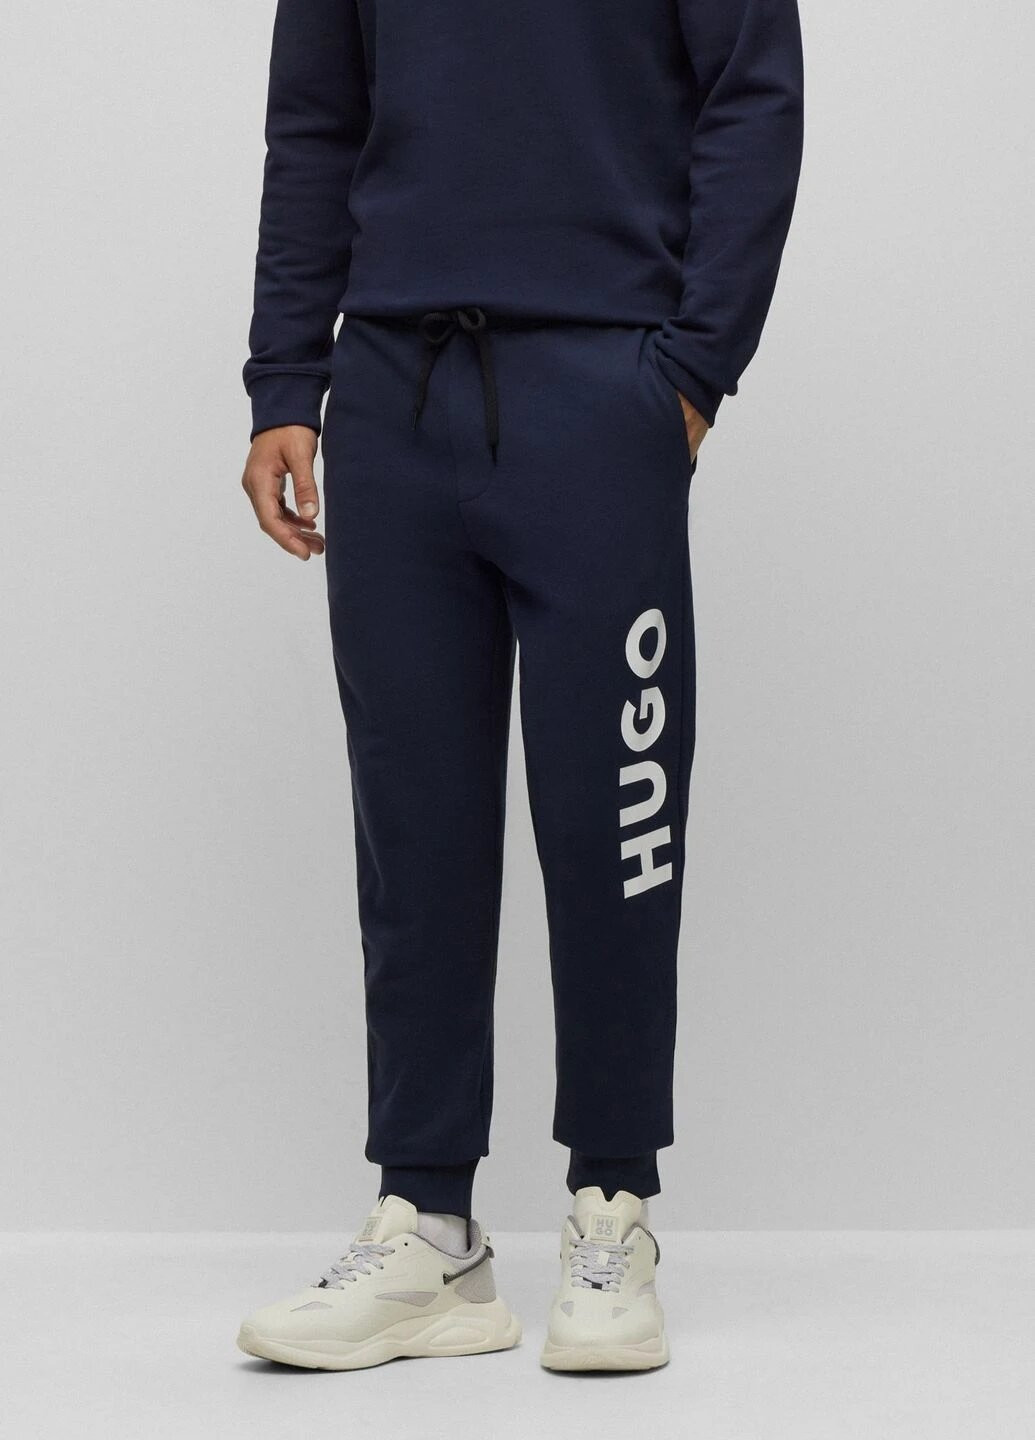 Чоловічий спортивний костюм Hugo Boss hugo (262809856)